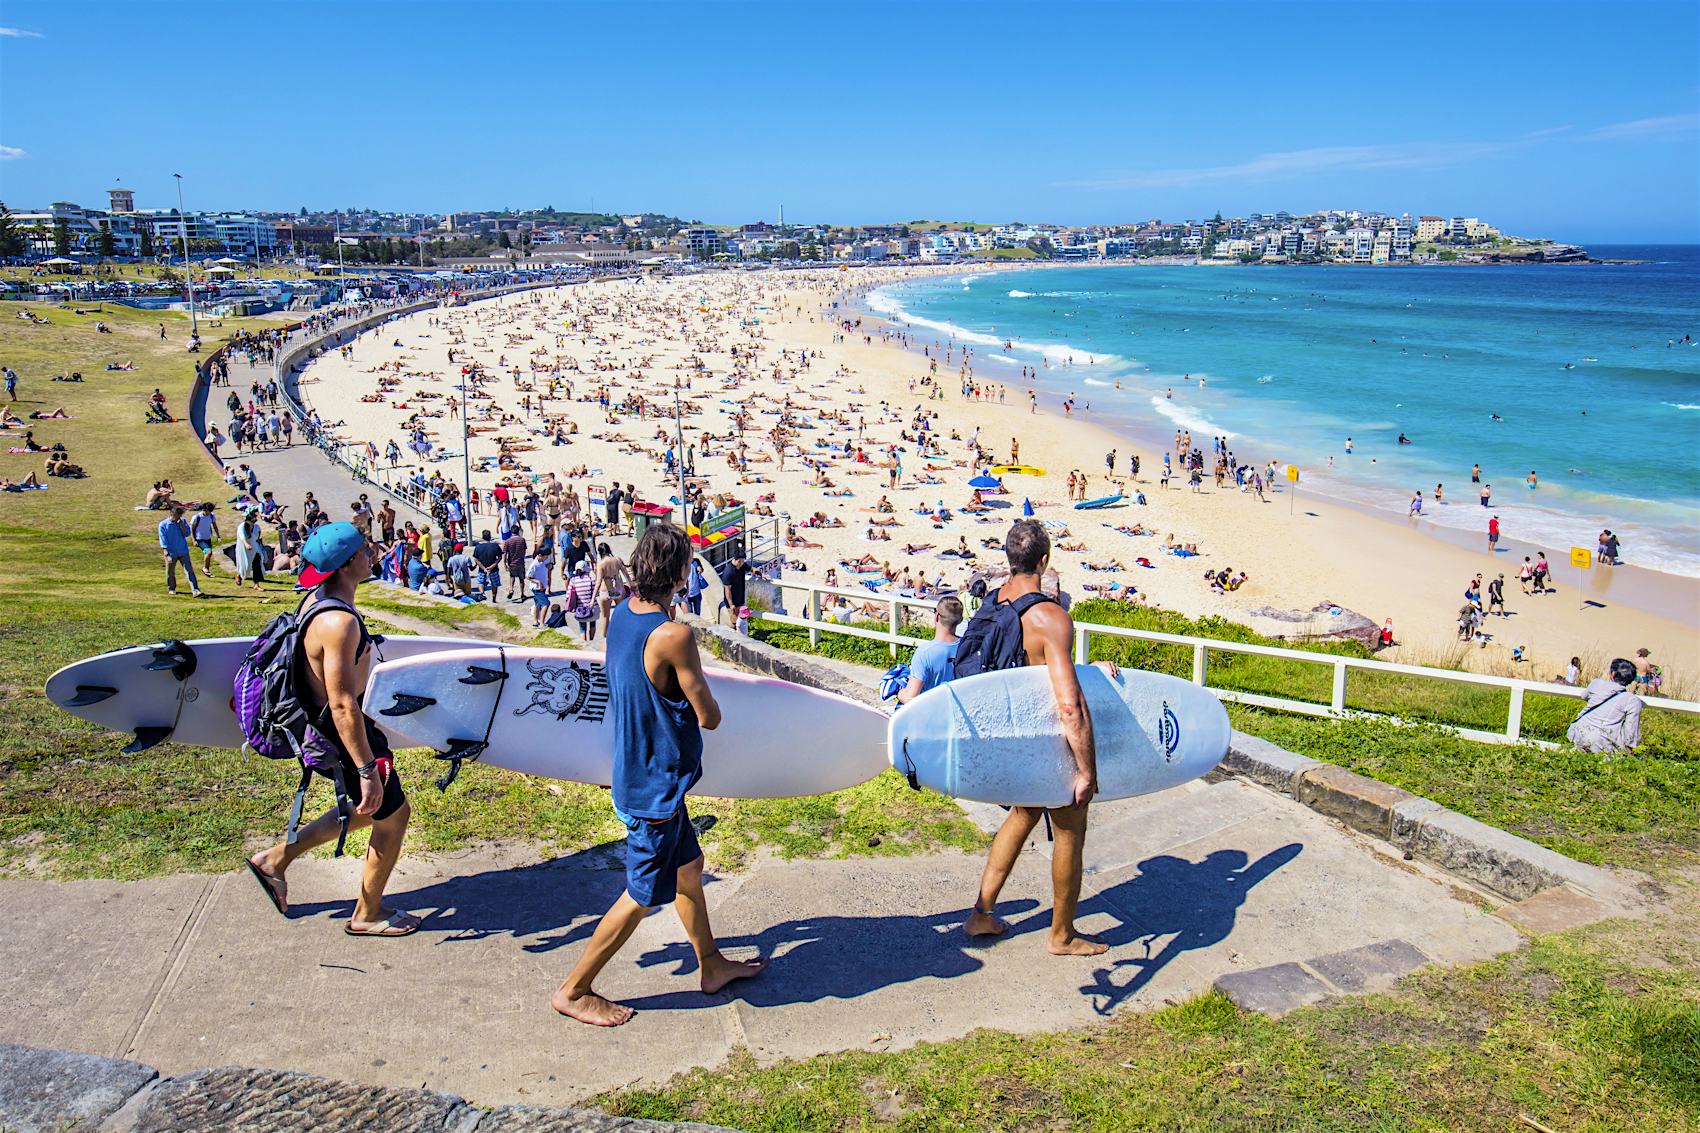 Sydney, Australia - November 19, 2015: Three surfers heading to the Bondi Beach Bondi beach with their surf boards on a sunny day